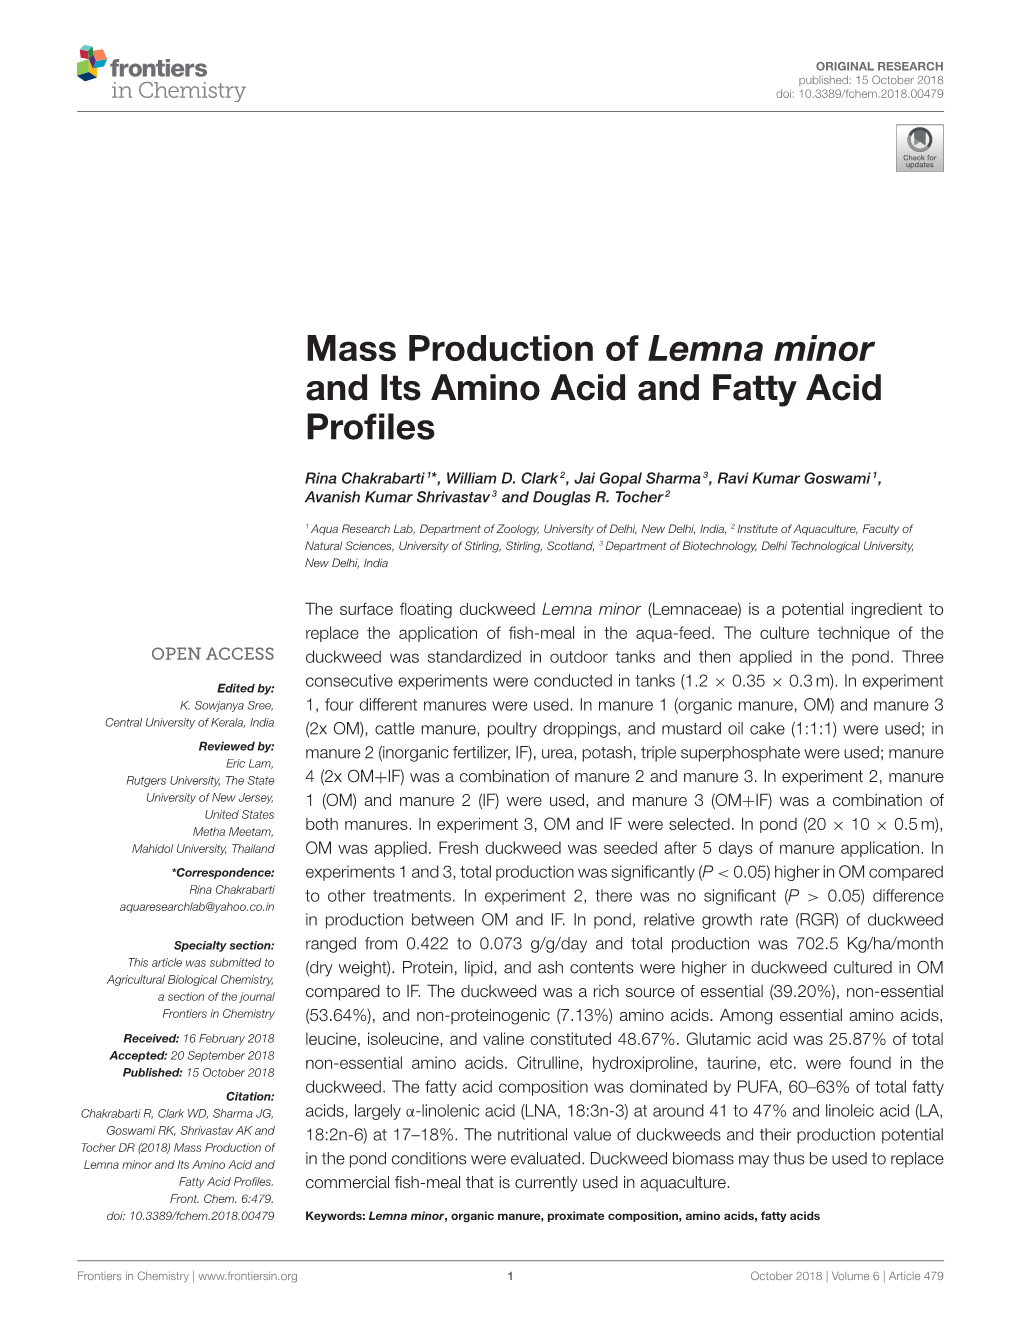 Mass Production of Lemna Minor and Its Amino Acid and Fatty Acid Profiles